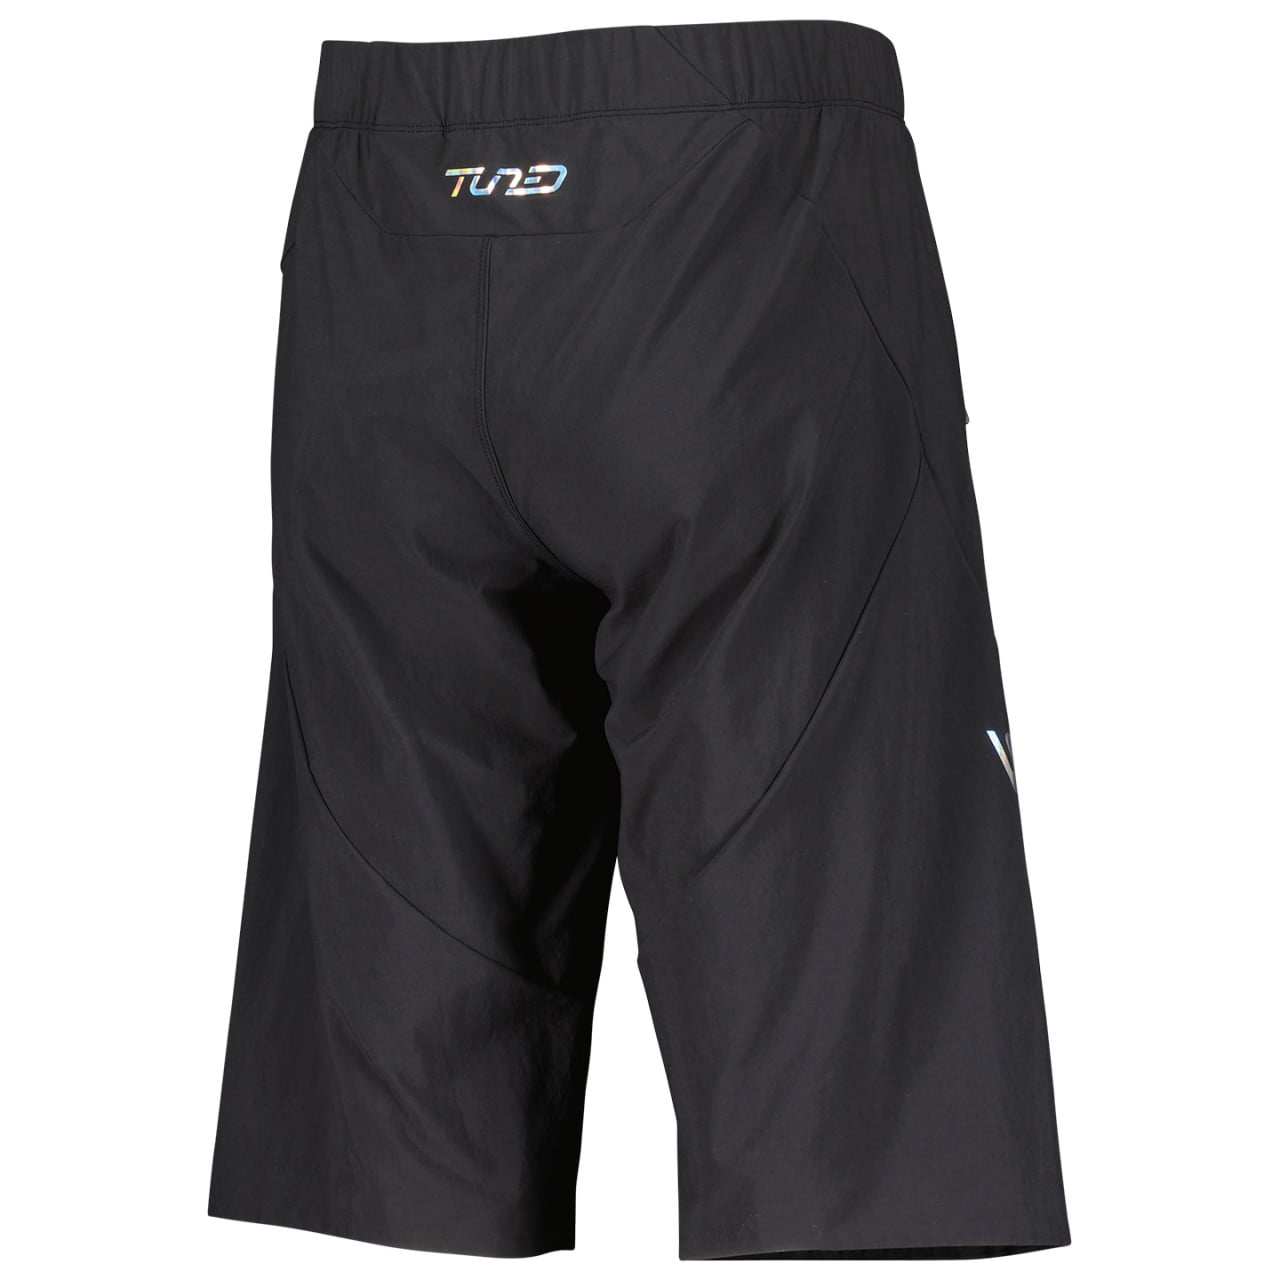 Trail Tuned Bike Shorts